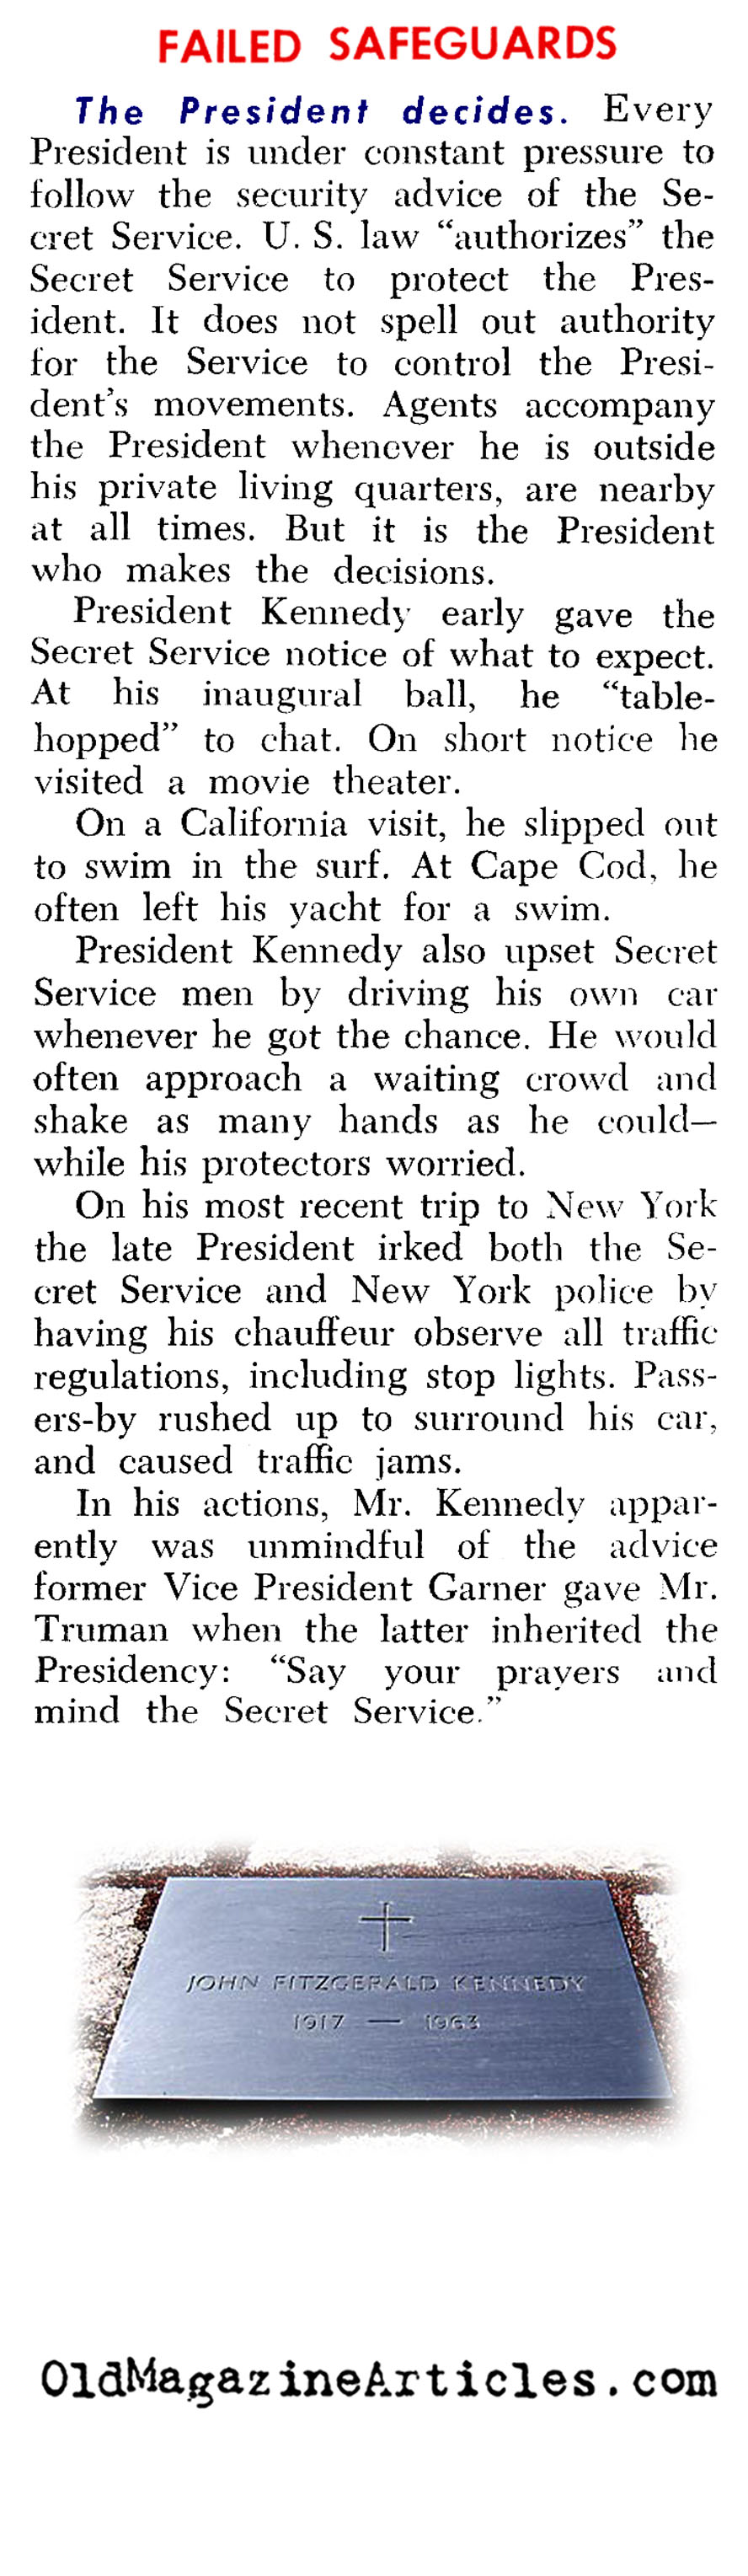 Spotlight on the Secret Service (United States News, 1963)